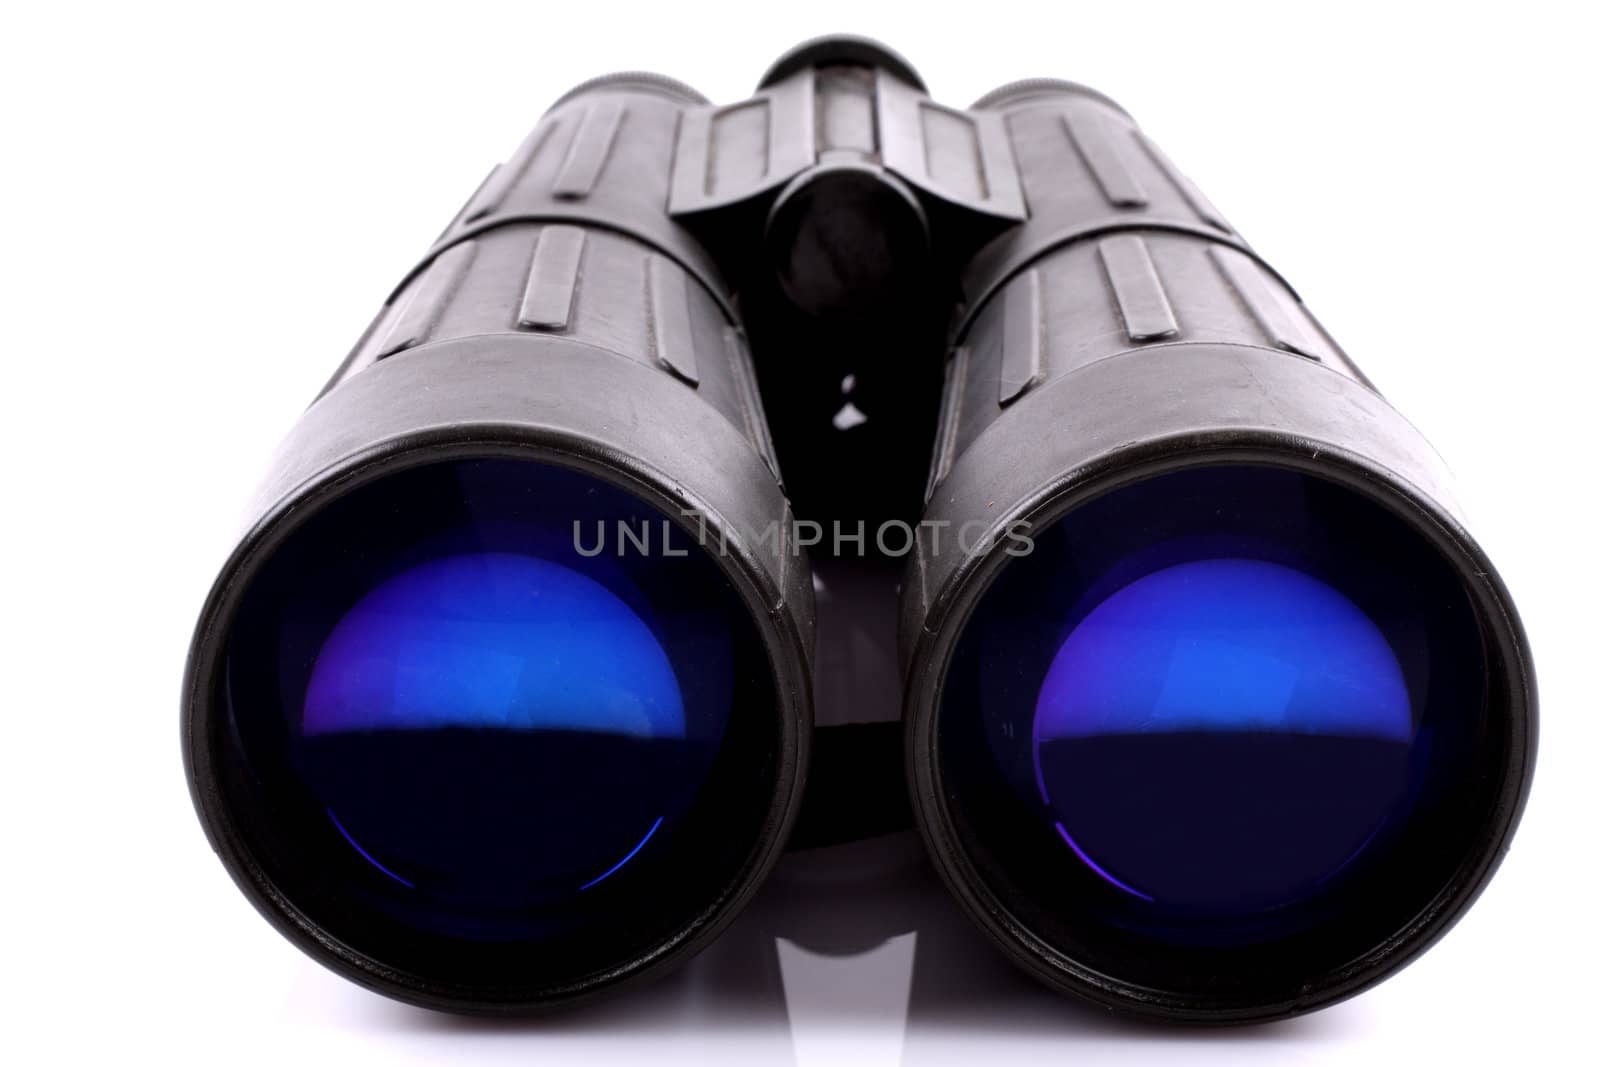 binoculars with blue lenses